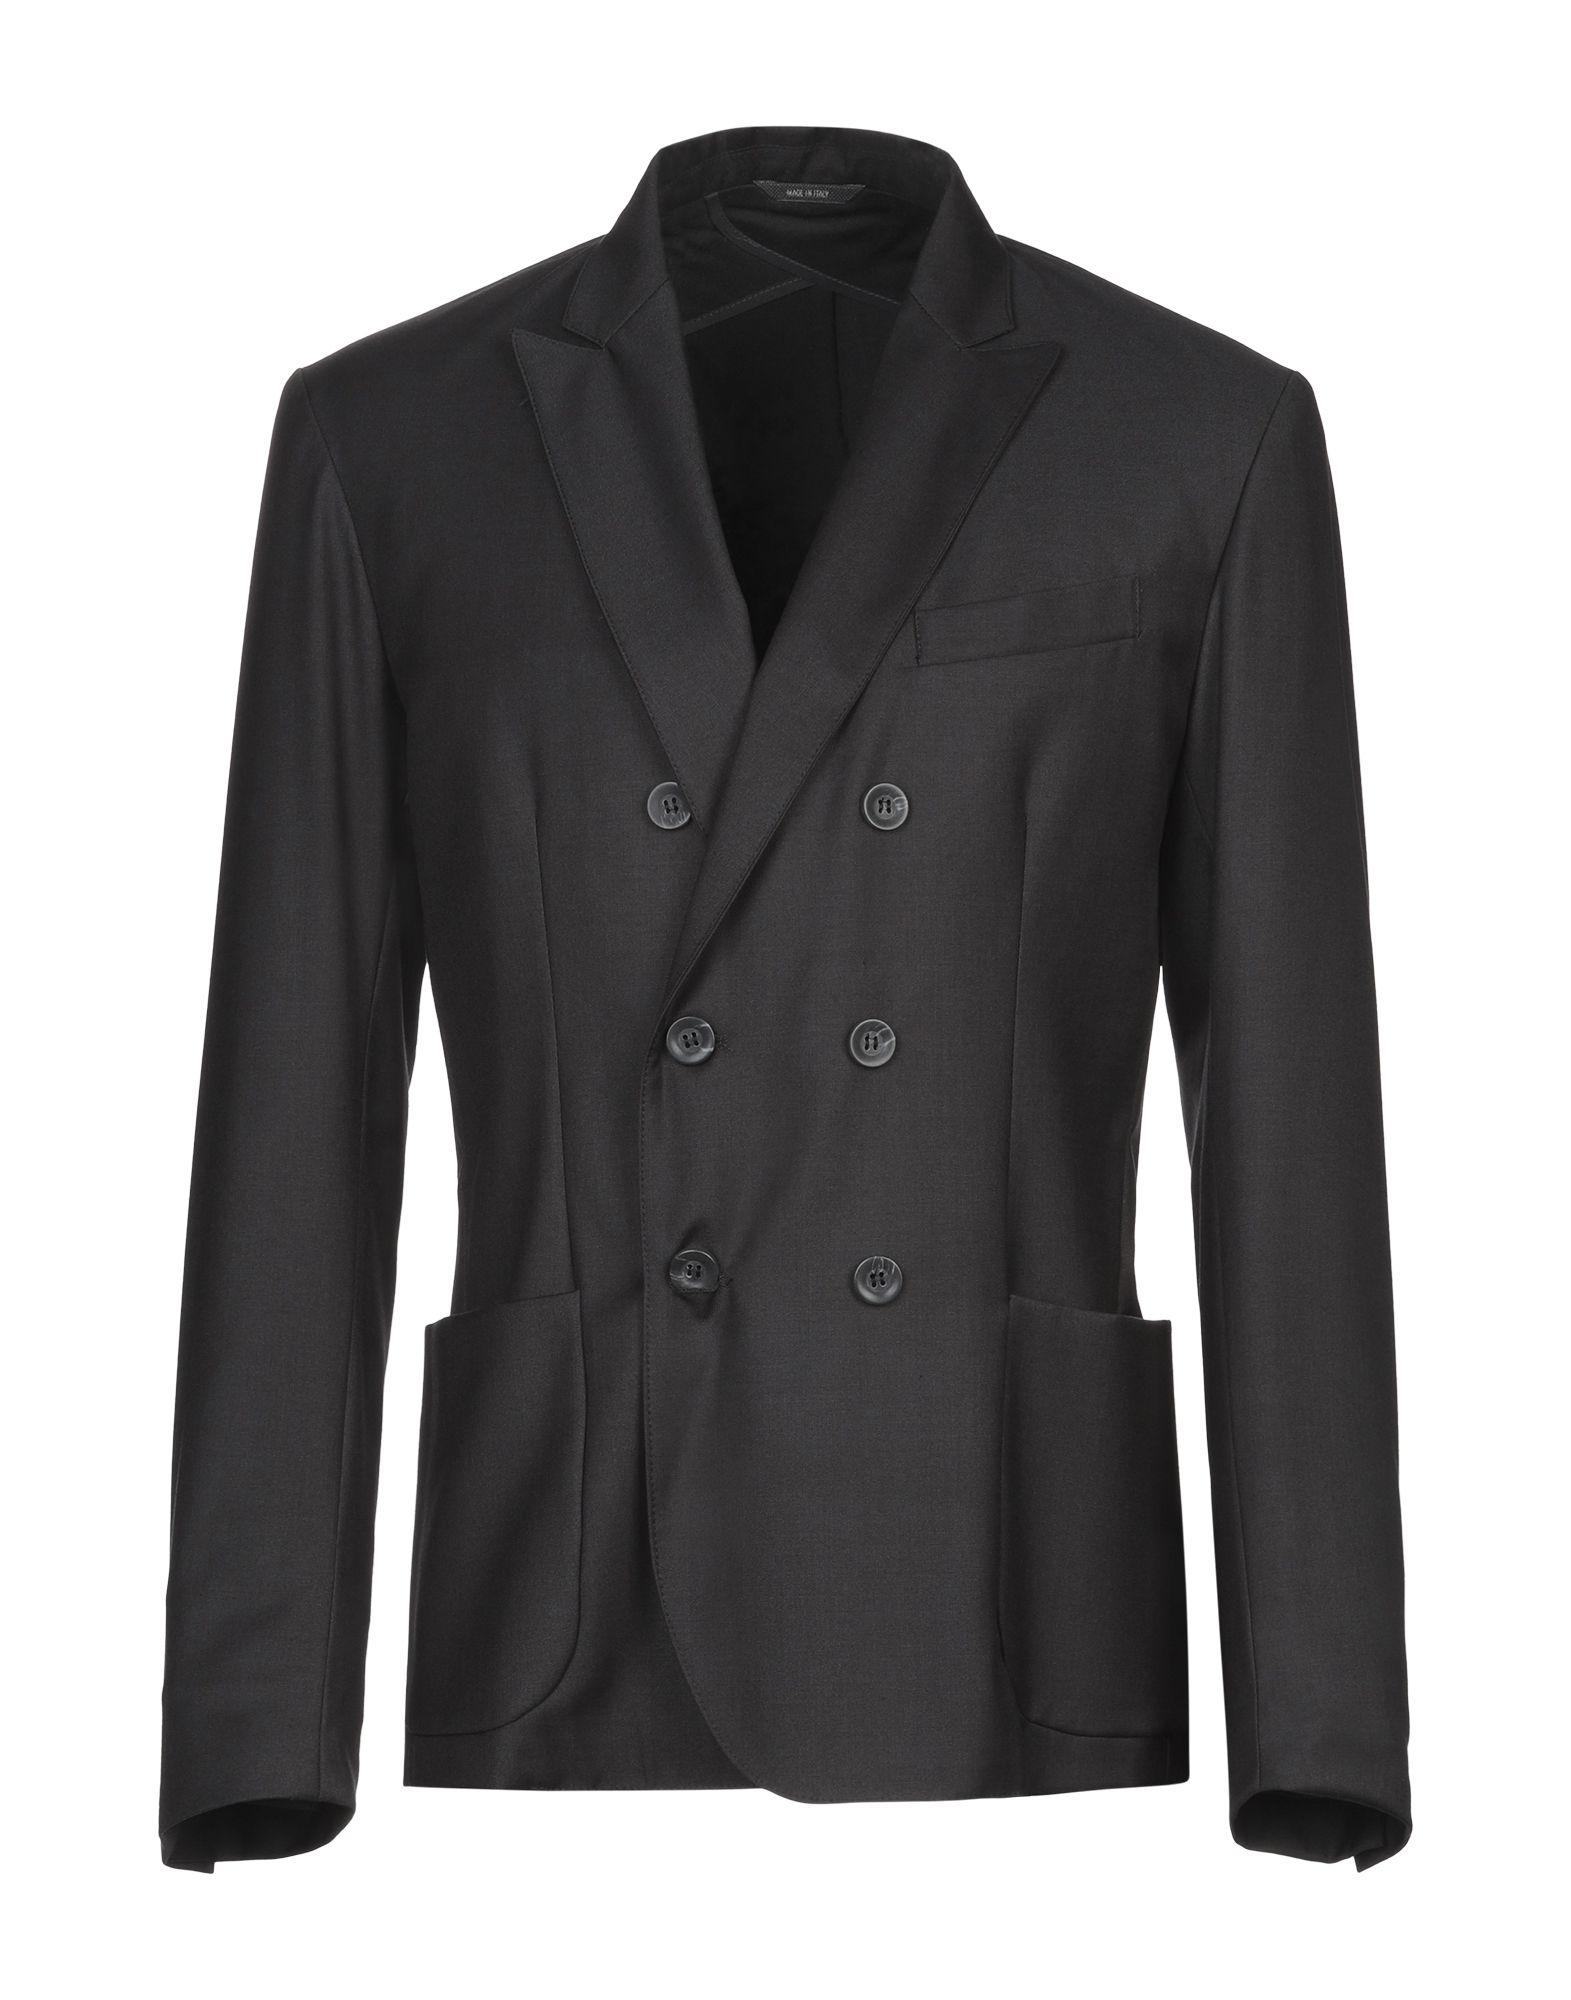 26.7 Twentysixseven Flannel Blazer in Steel Grey (Gray) for Men - Lyst